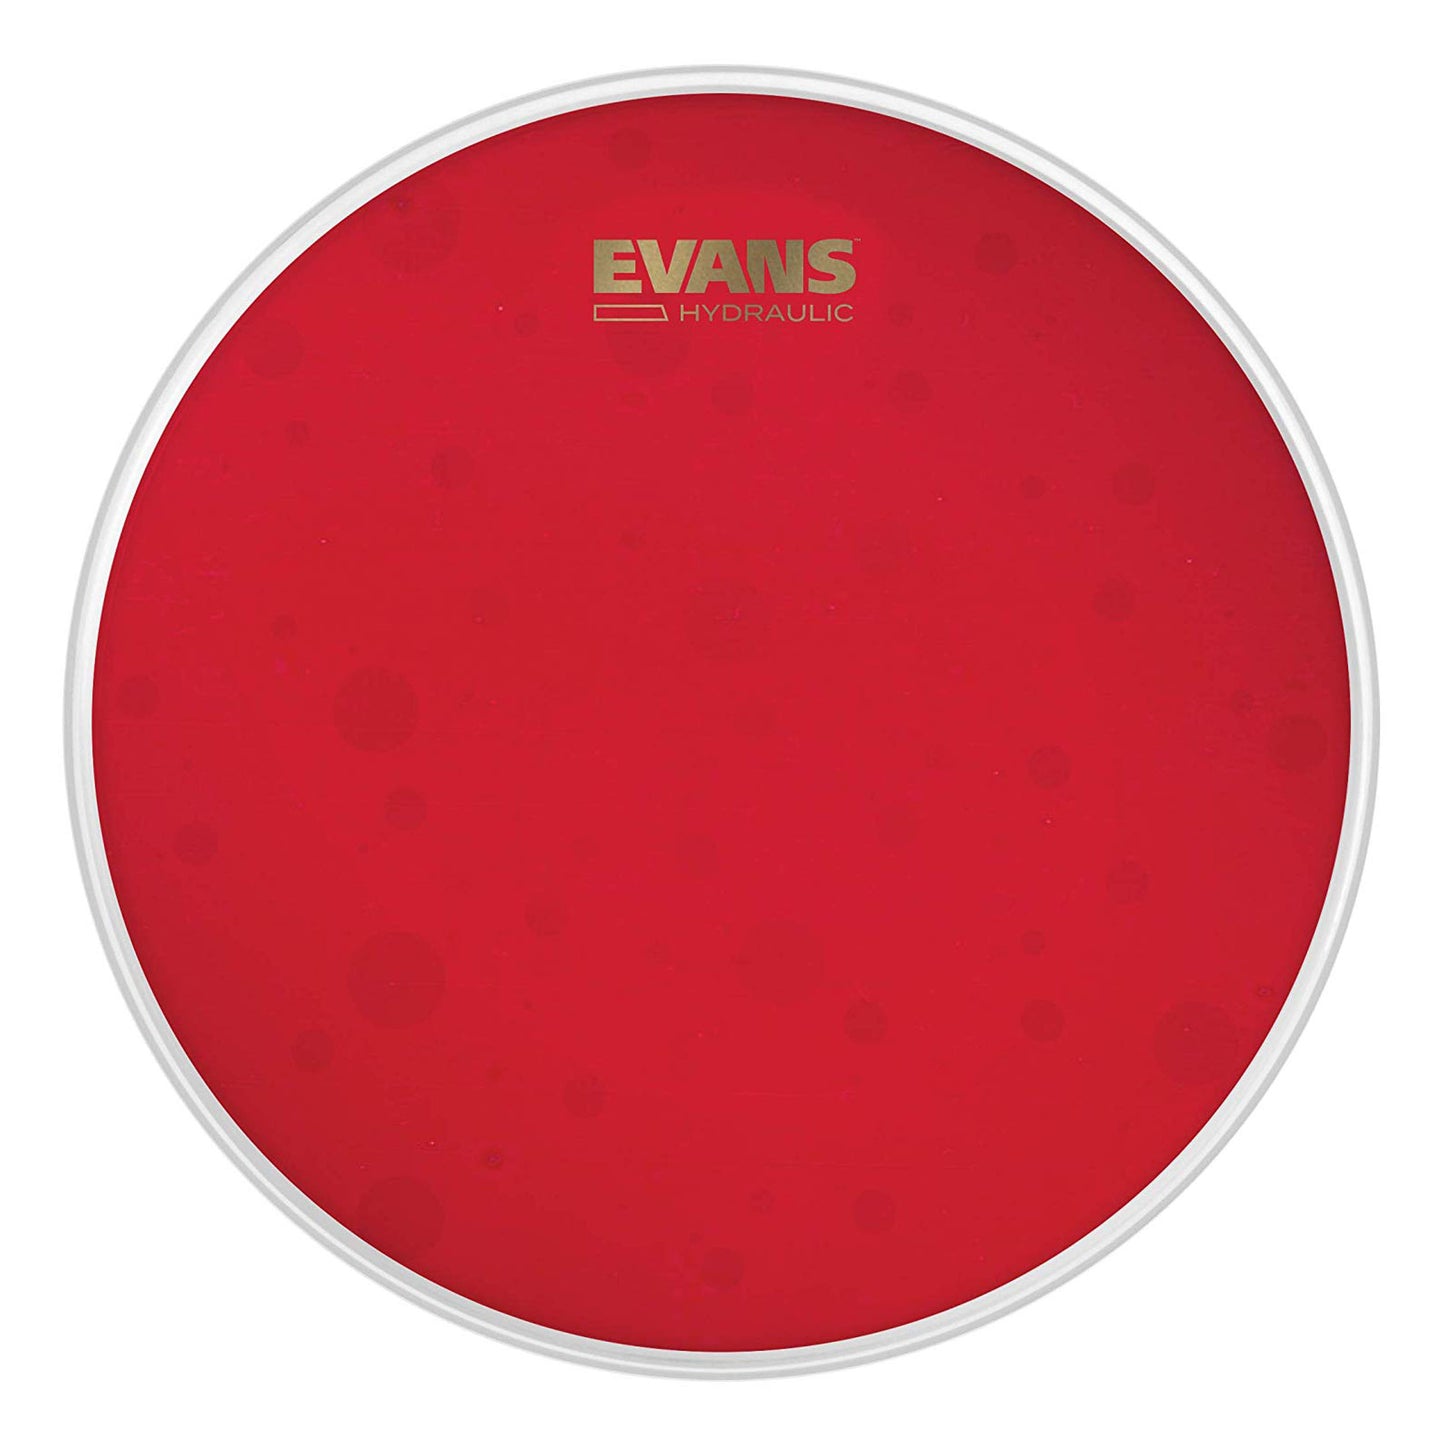 Evans Black Hydraulic Red Bass Drum Head - 22"